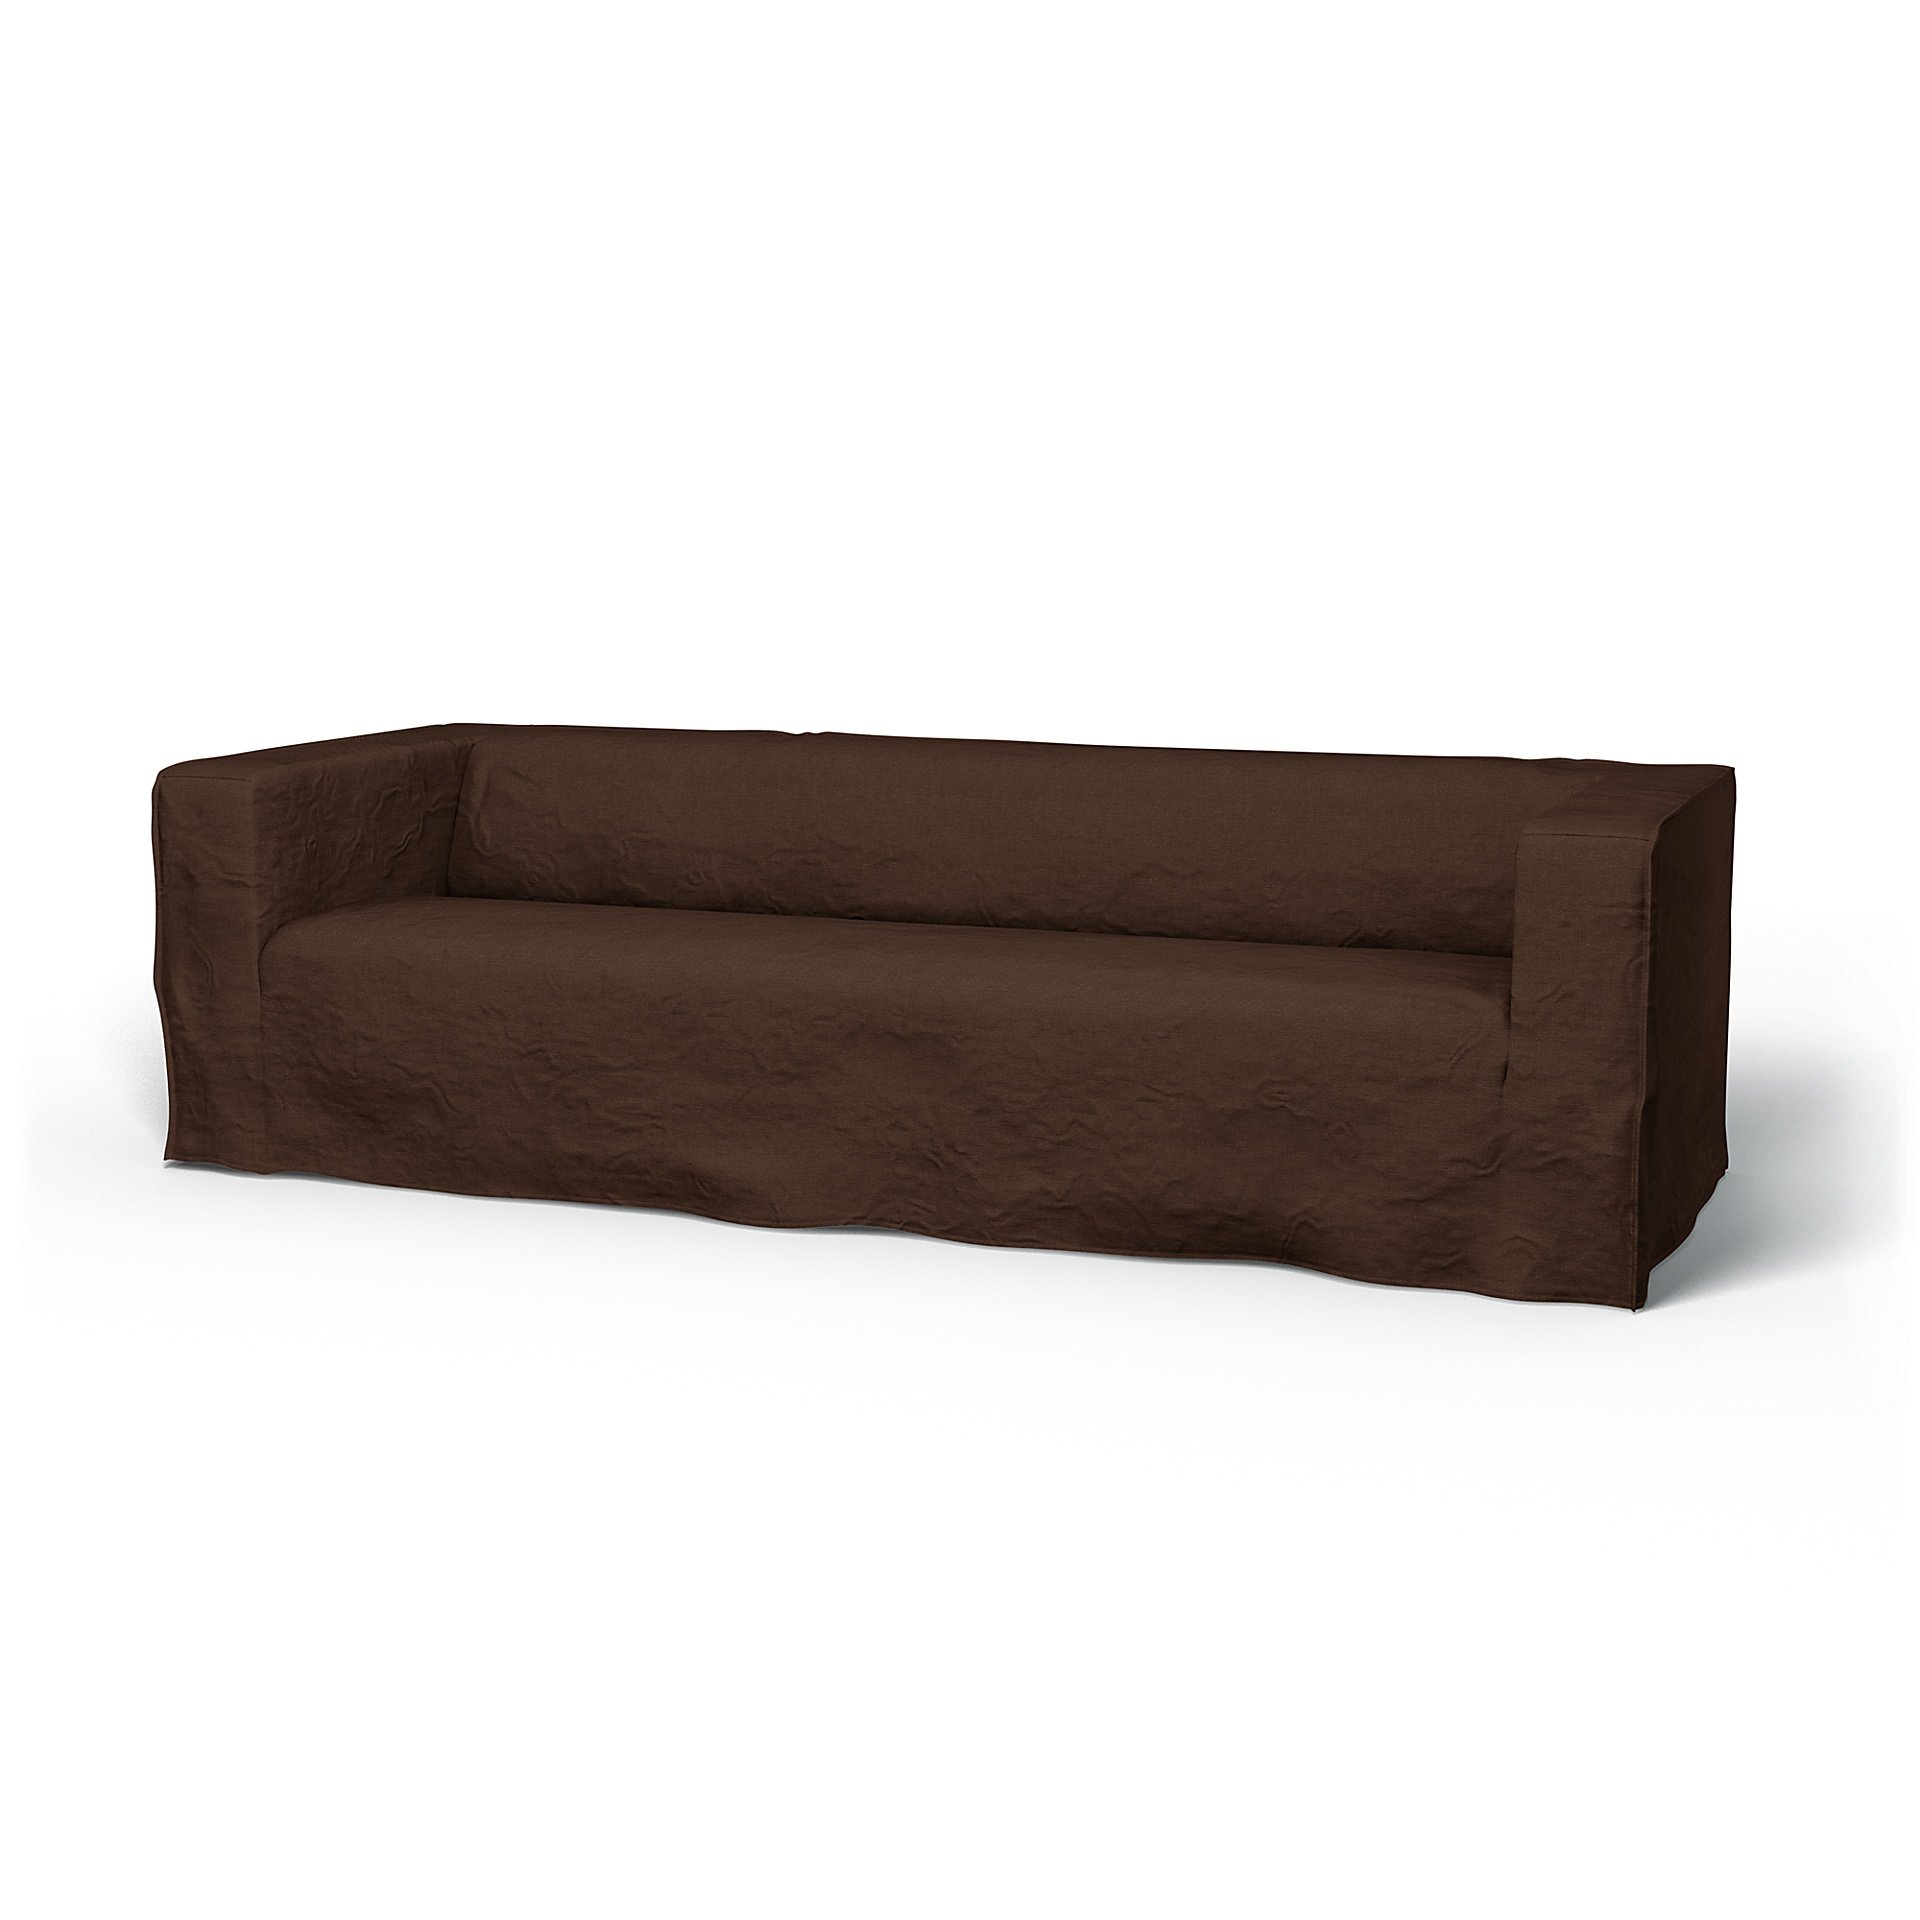 IKEA - Klippan 4 Seater Sofa Cover, Chocolate, Linen - Bemz